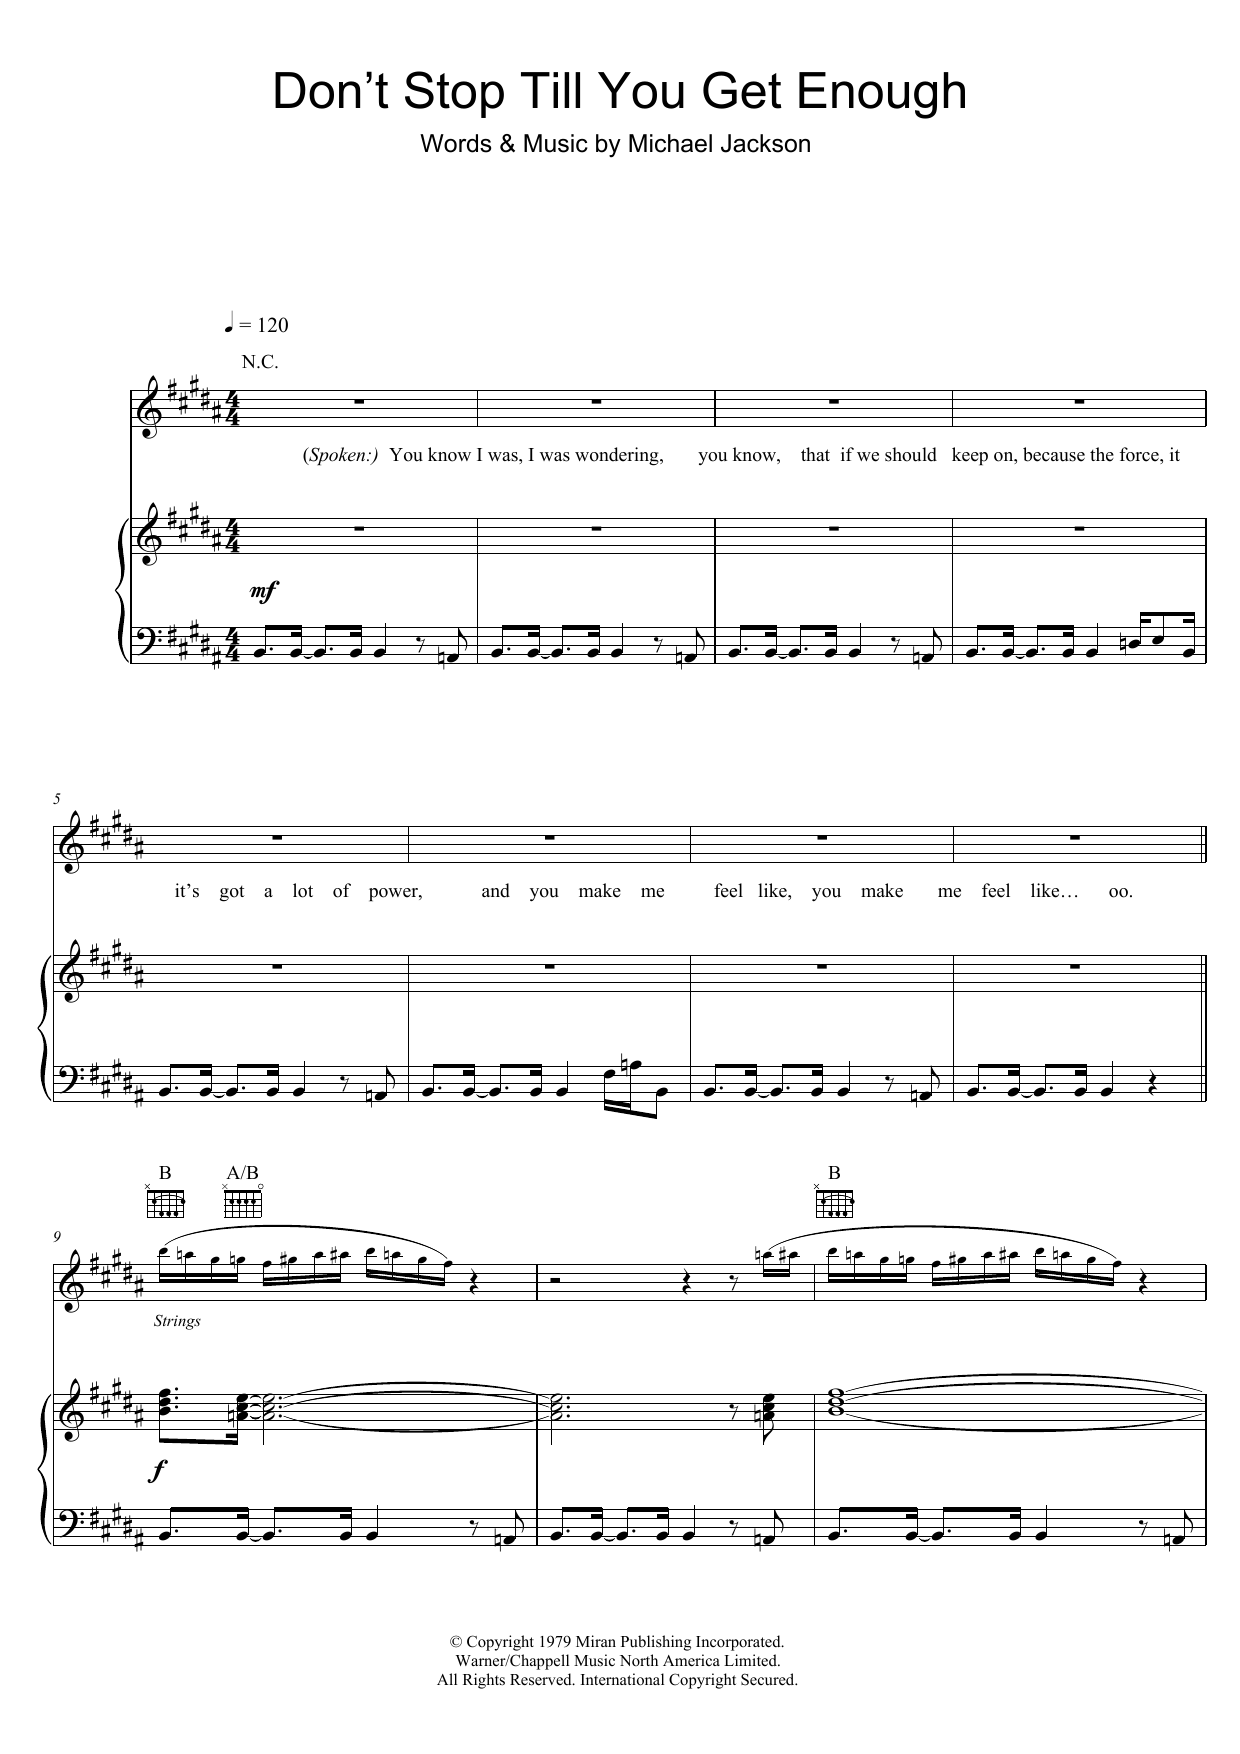 Michael Jackson Don't Stop Till You Get Enough Sheet Music Notes & Chords for Ukulele - Download or Print PDF